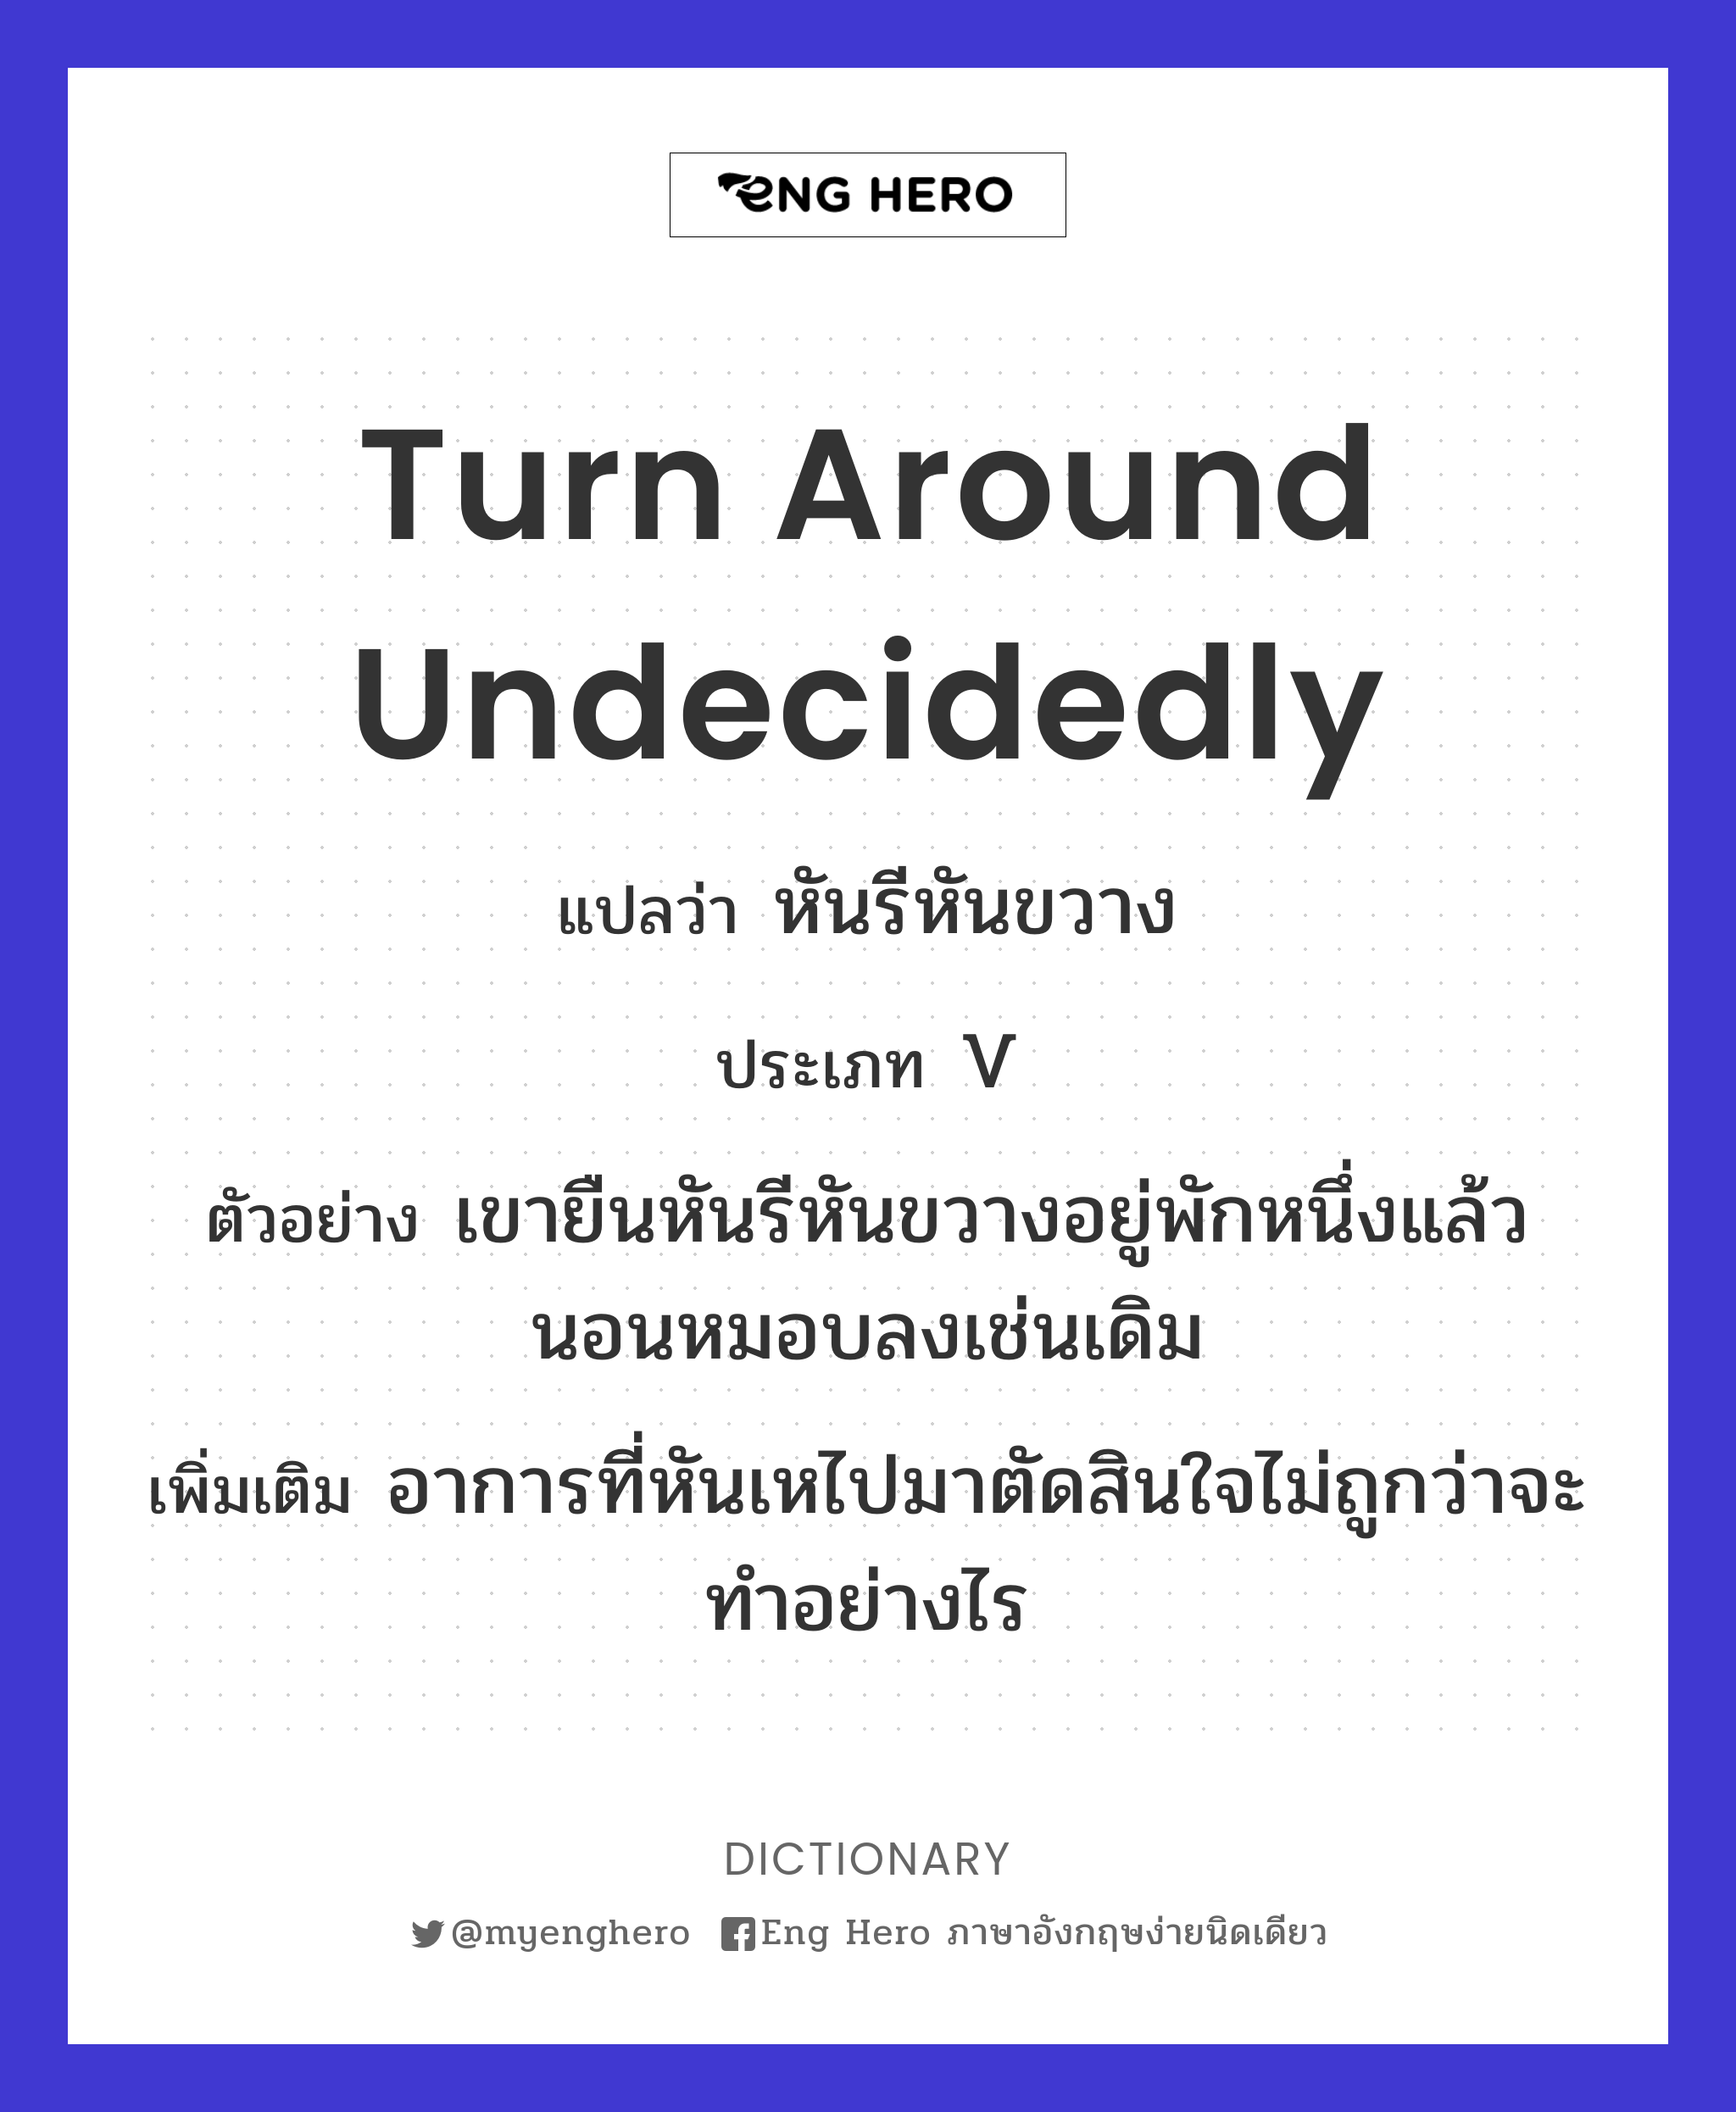 turn around undecidedly